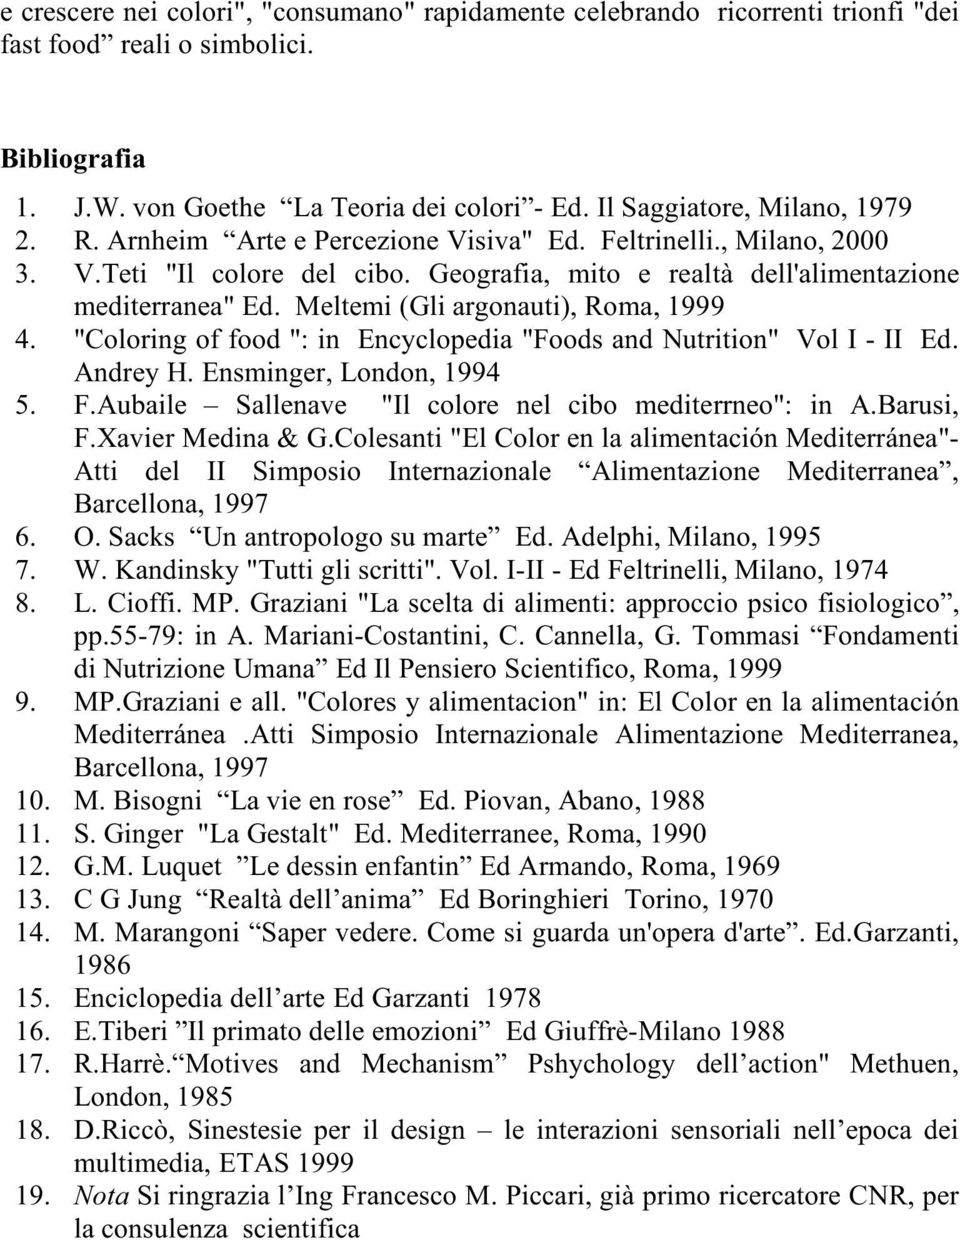 Meltemi (Gli argonauti), Roma, 1999 4. "Coloring of food ": in Encyclopedia "Foods and Nutrition" Vol I - II Ed. Andrey H. Ensminger, London, 1994 5. F.